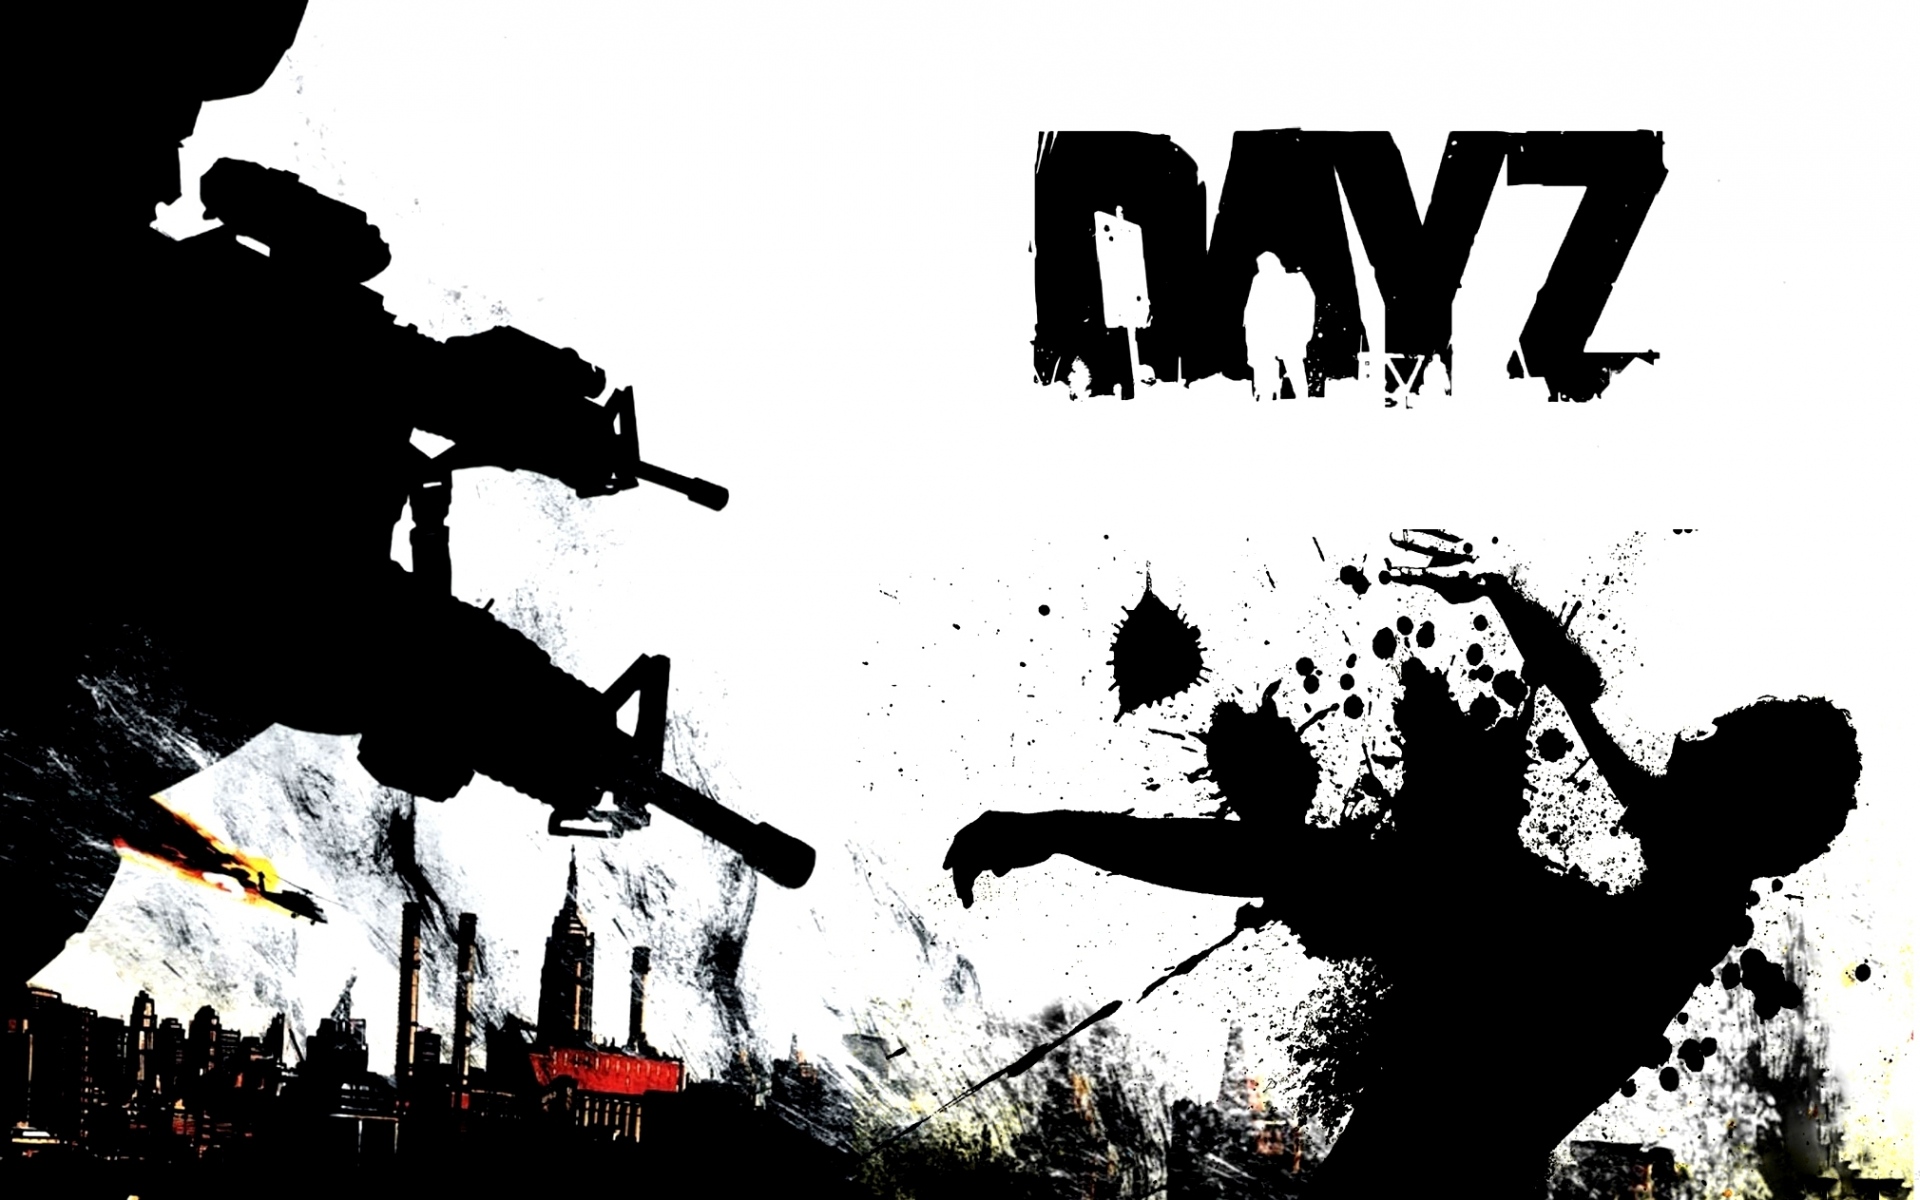 Картинки Dayz, день z, зомби, арма 2, оружие, выживание, зомби фото и обои на рабочий стол